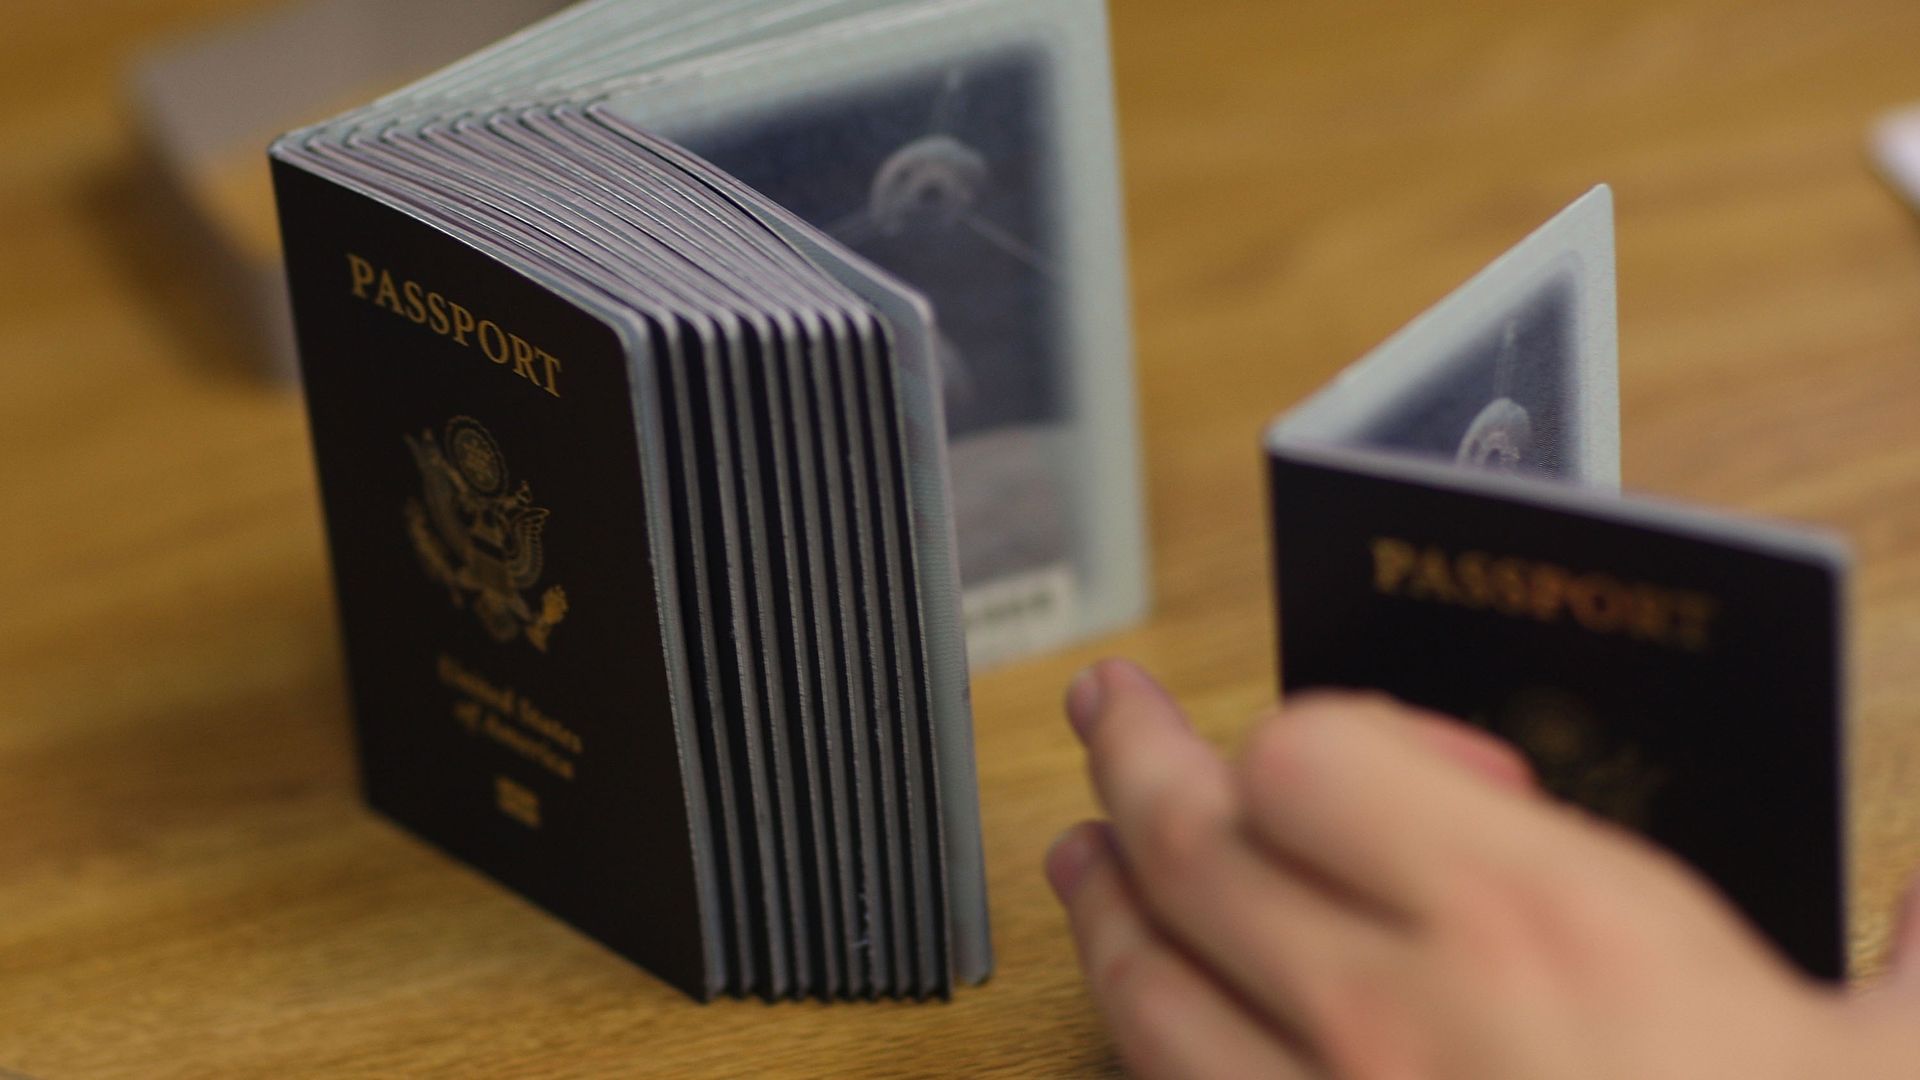 Picture of U.S. passports